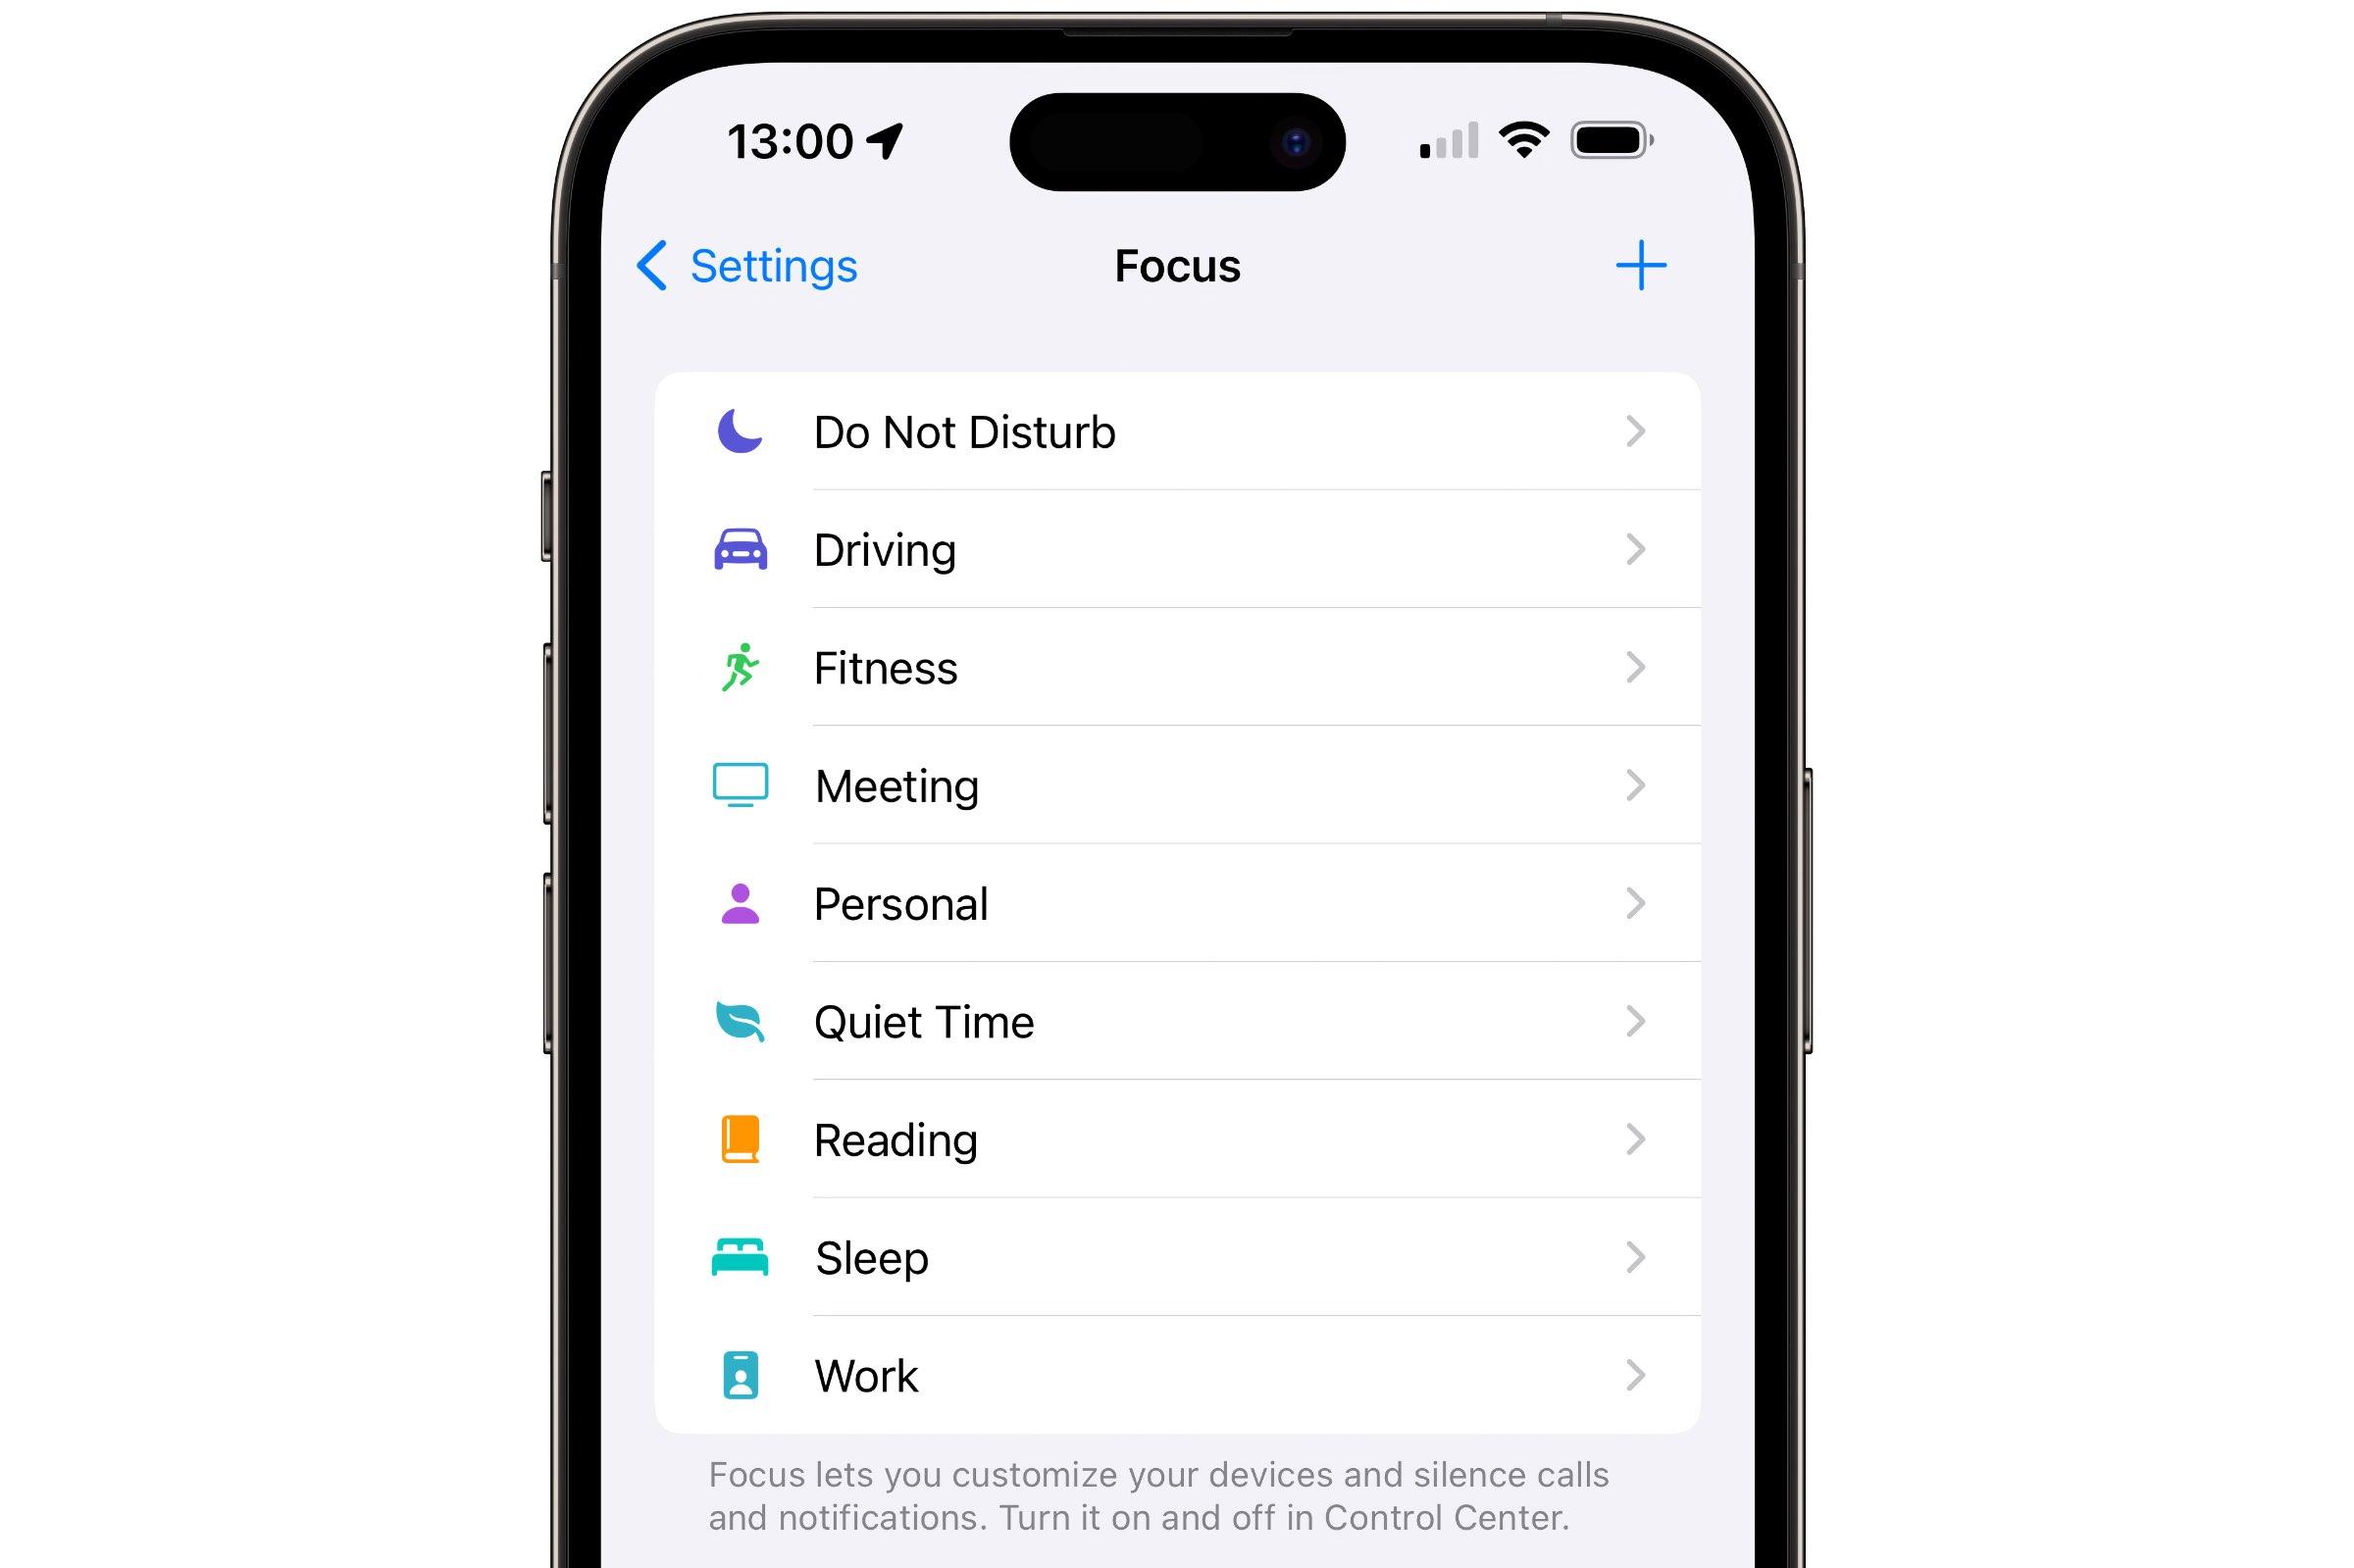 iPhone showing Always On Display options in Settings app.